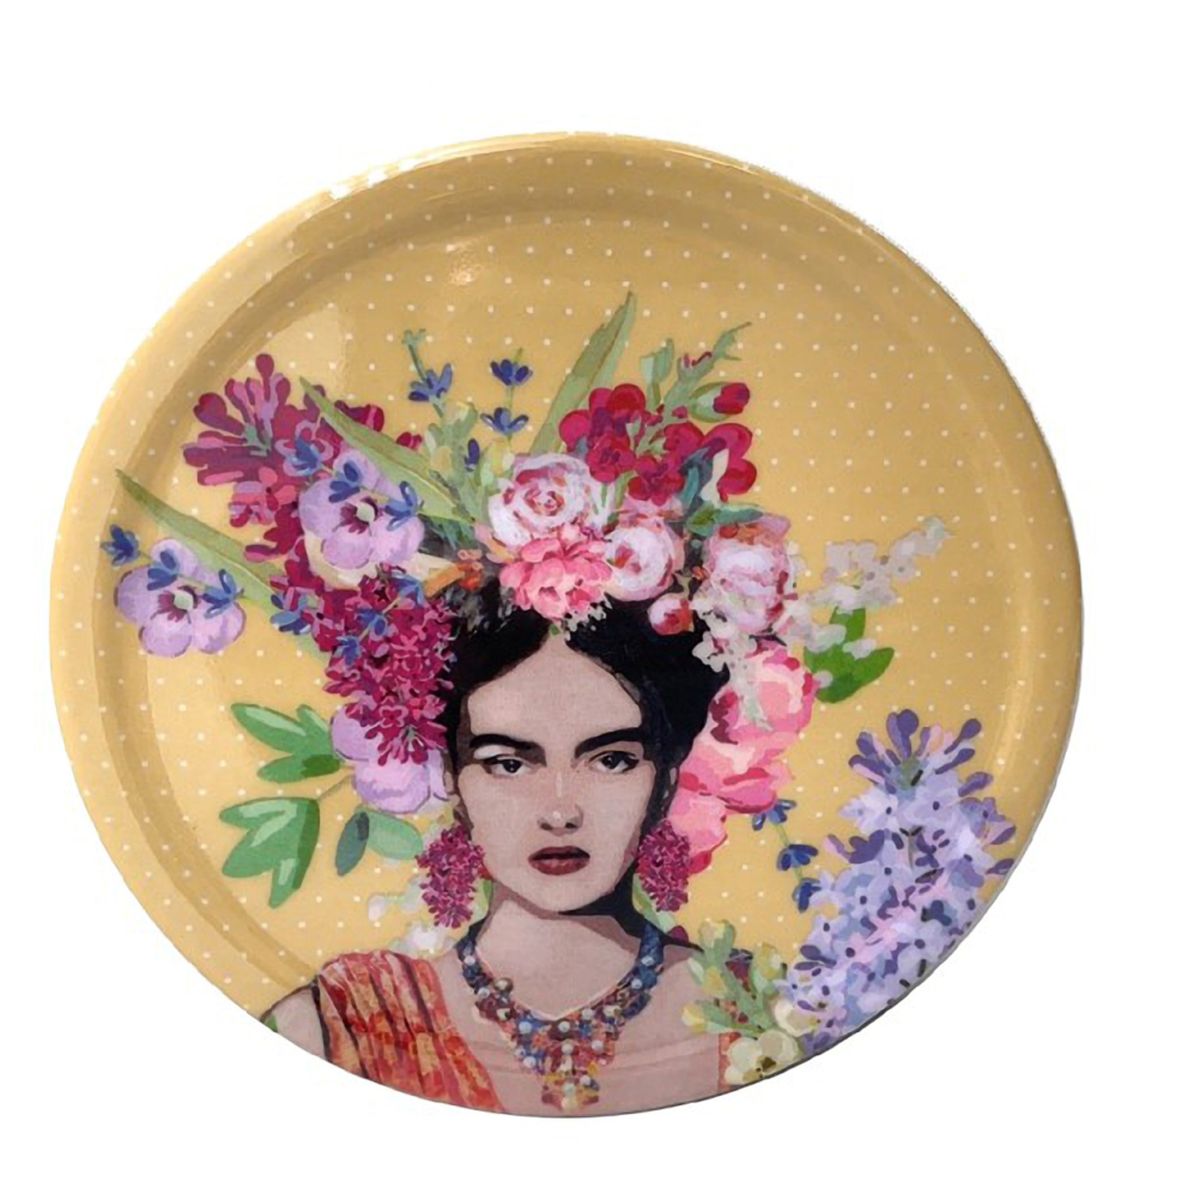 Box containing 6 Frida Khalo coasters